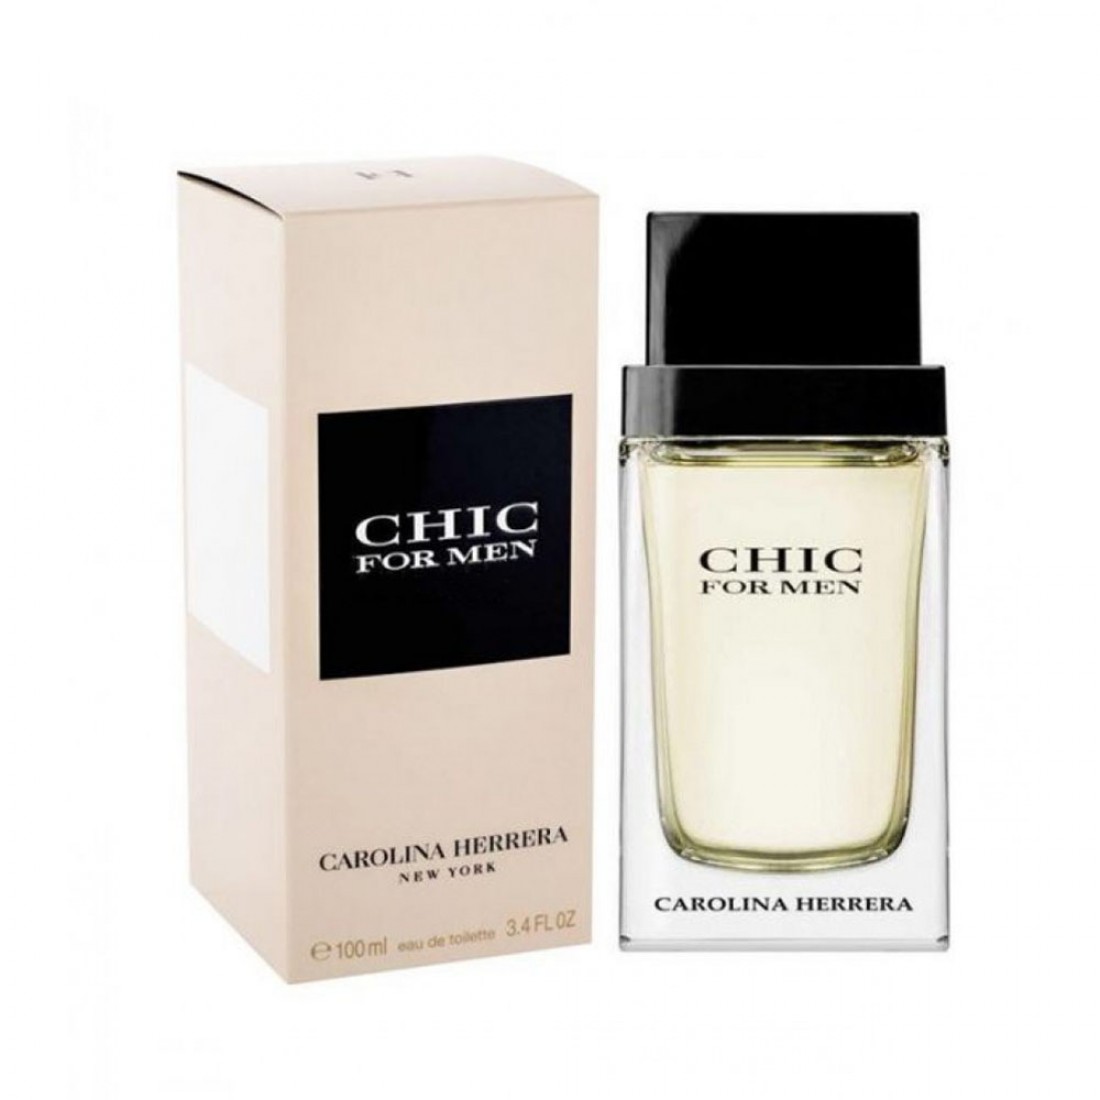 Perfume Carolina Herrera Chic for Men - Eau de Toilette 100ml - عطر